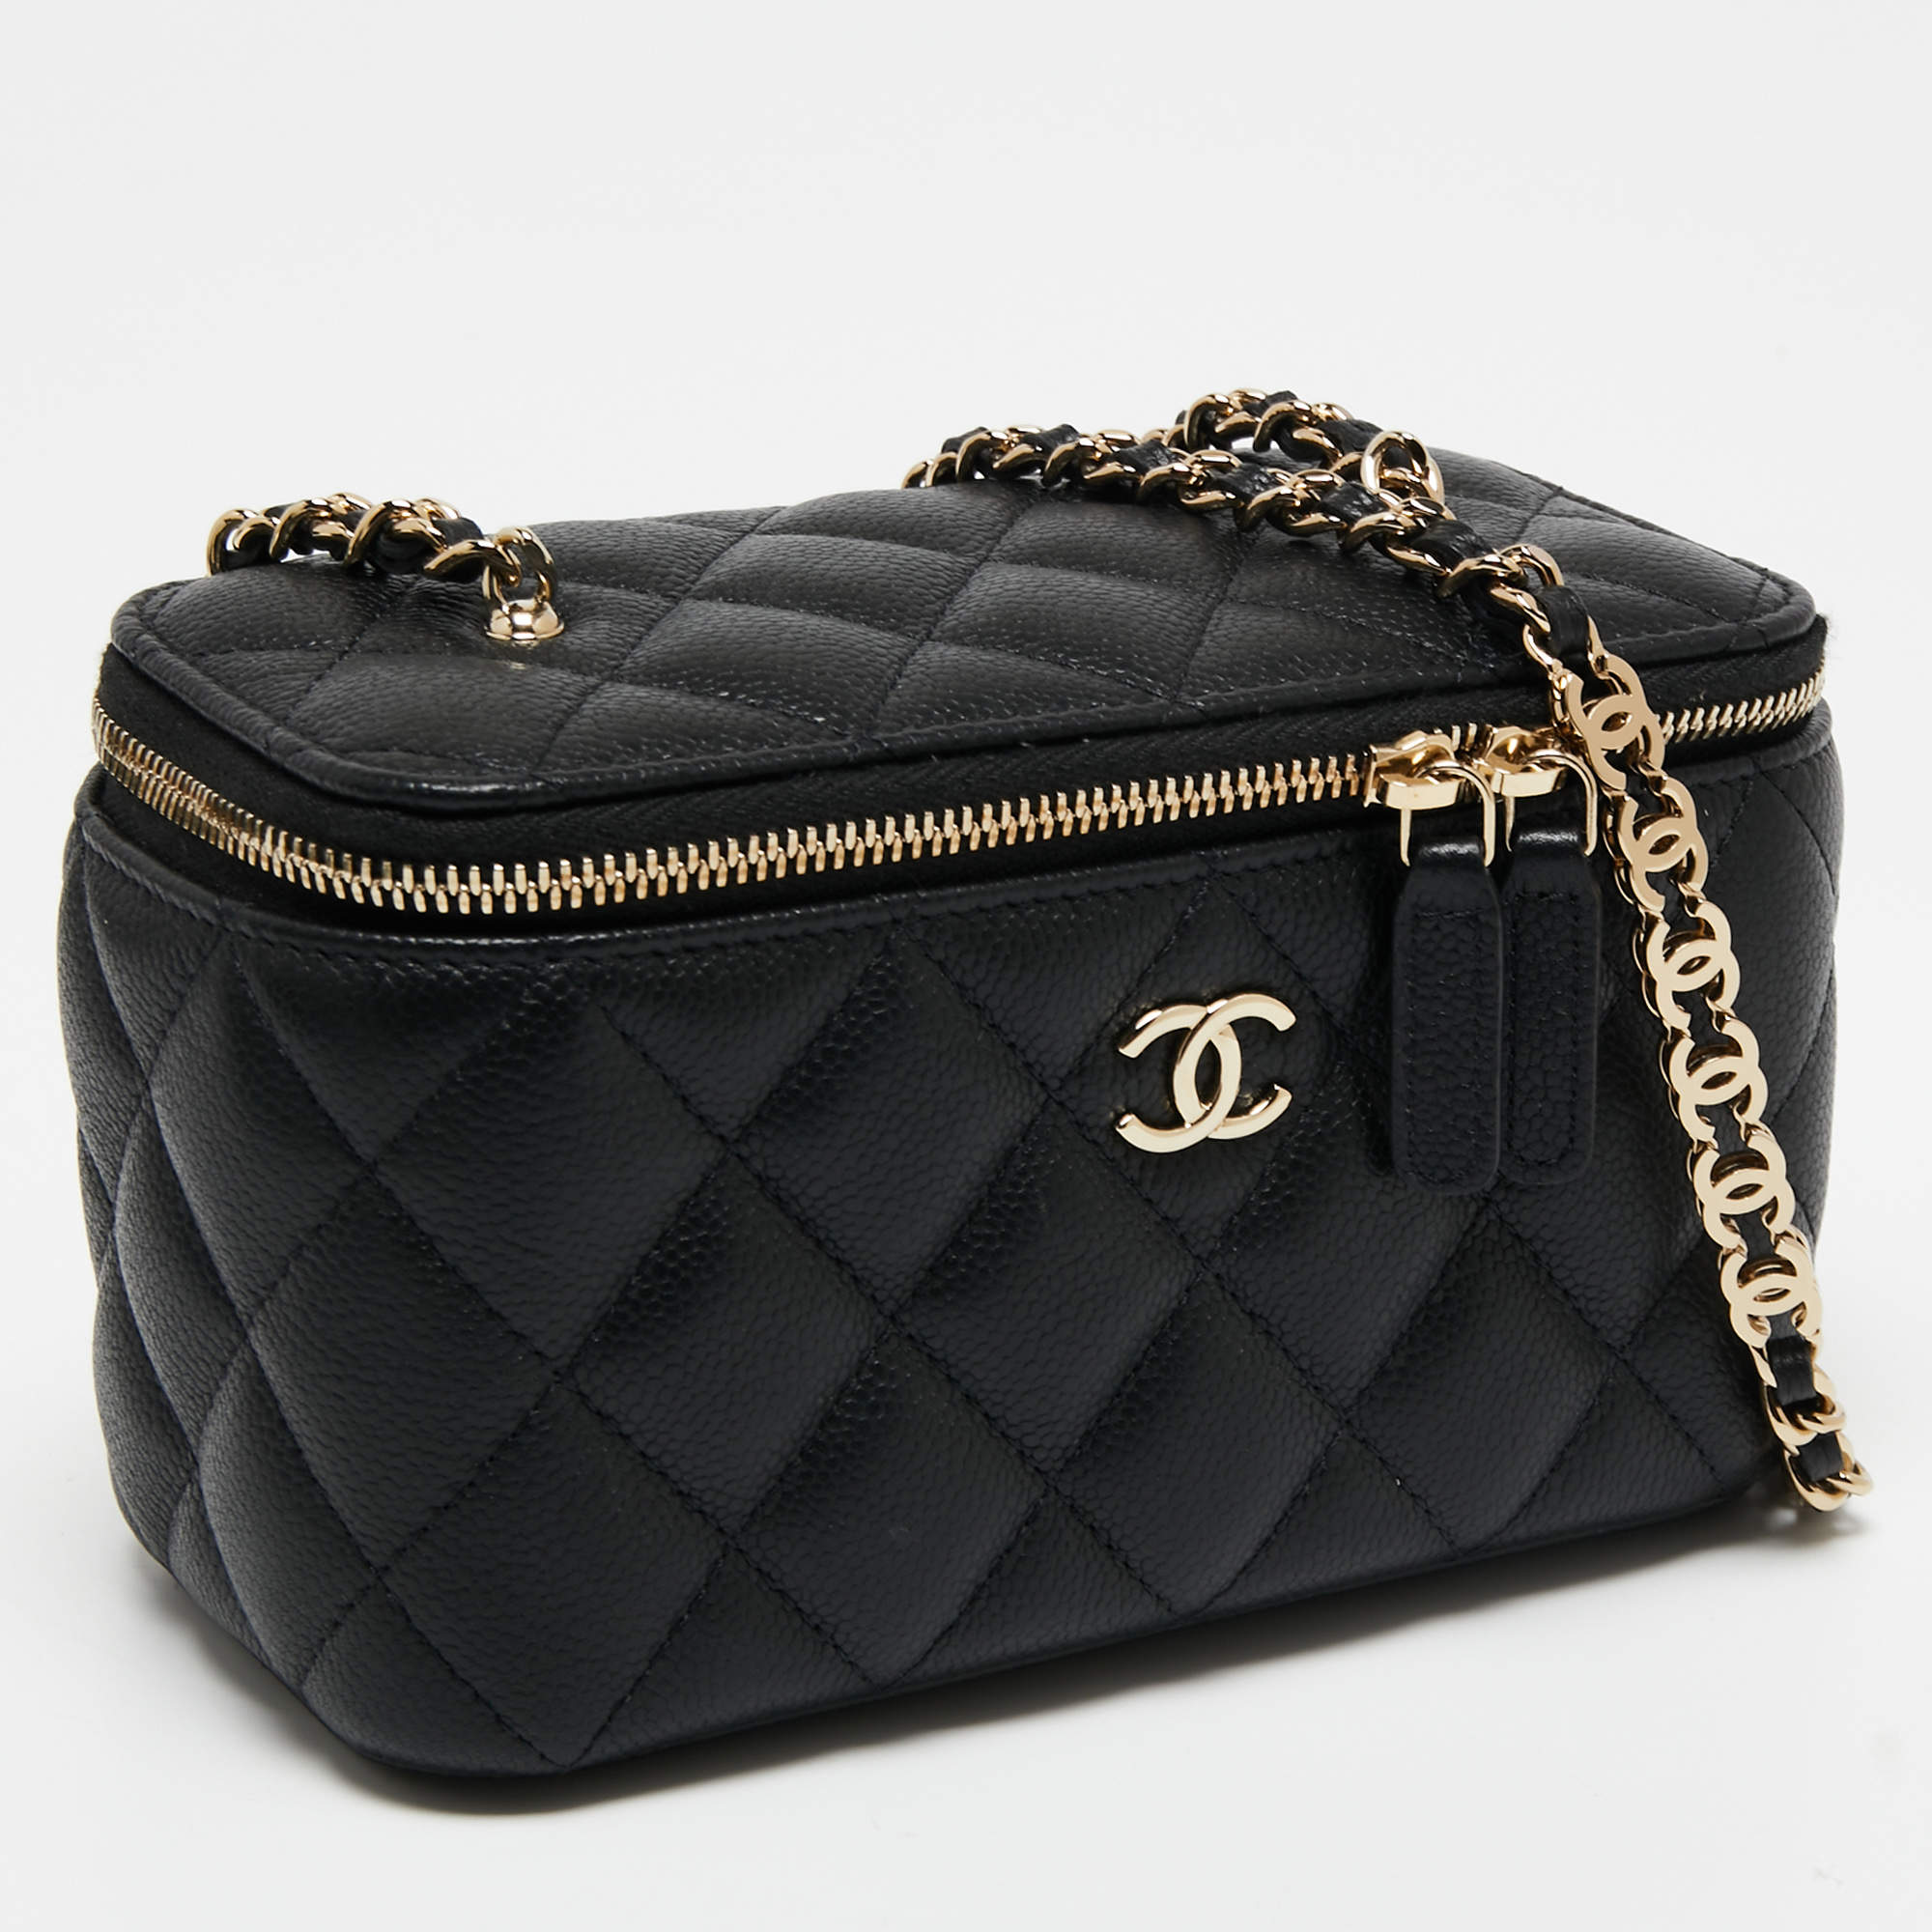 Chanel Black Caviar Leather Small CC Vanity Case Bag Chanel